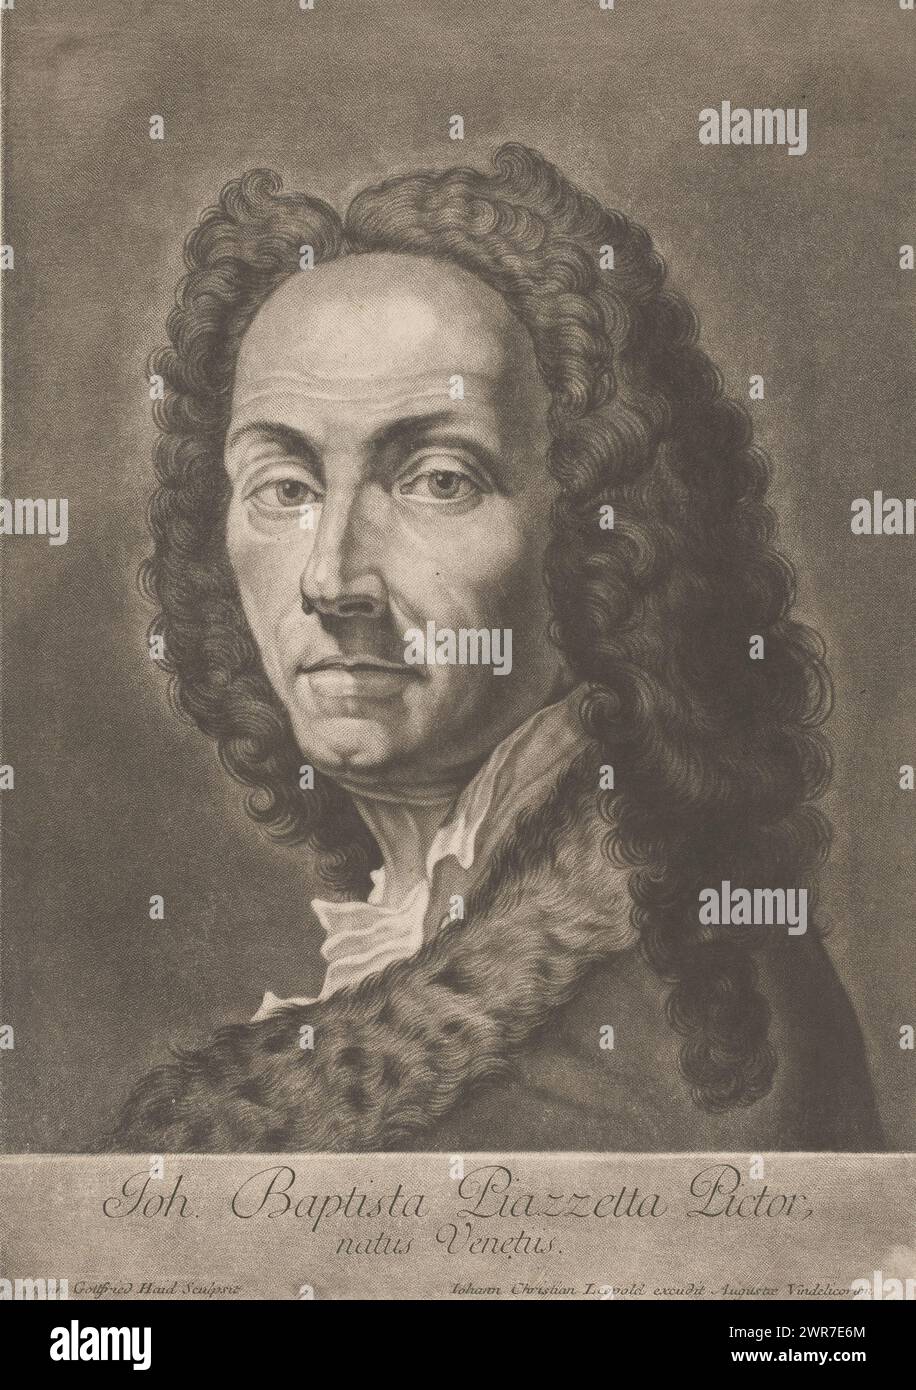 Portrait of Giovanni Battista Piazzetta, print maker: Johann Gottfried Haid, publisher: Johann Christian Leopold, Augsburg, 1720 - 1755, paper, engraving, height 381 mm × width 267 mm, print Stock Photo